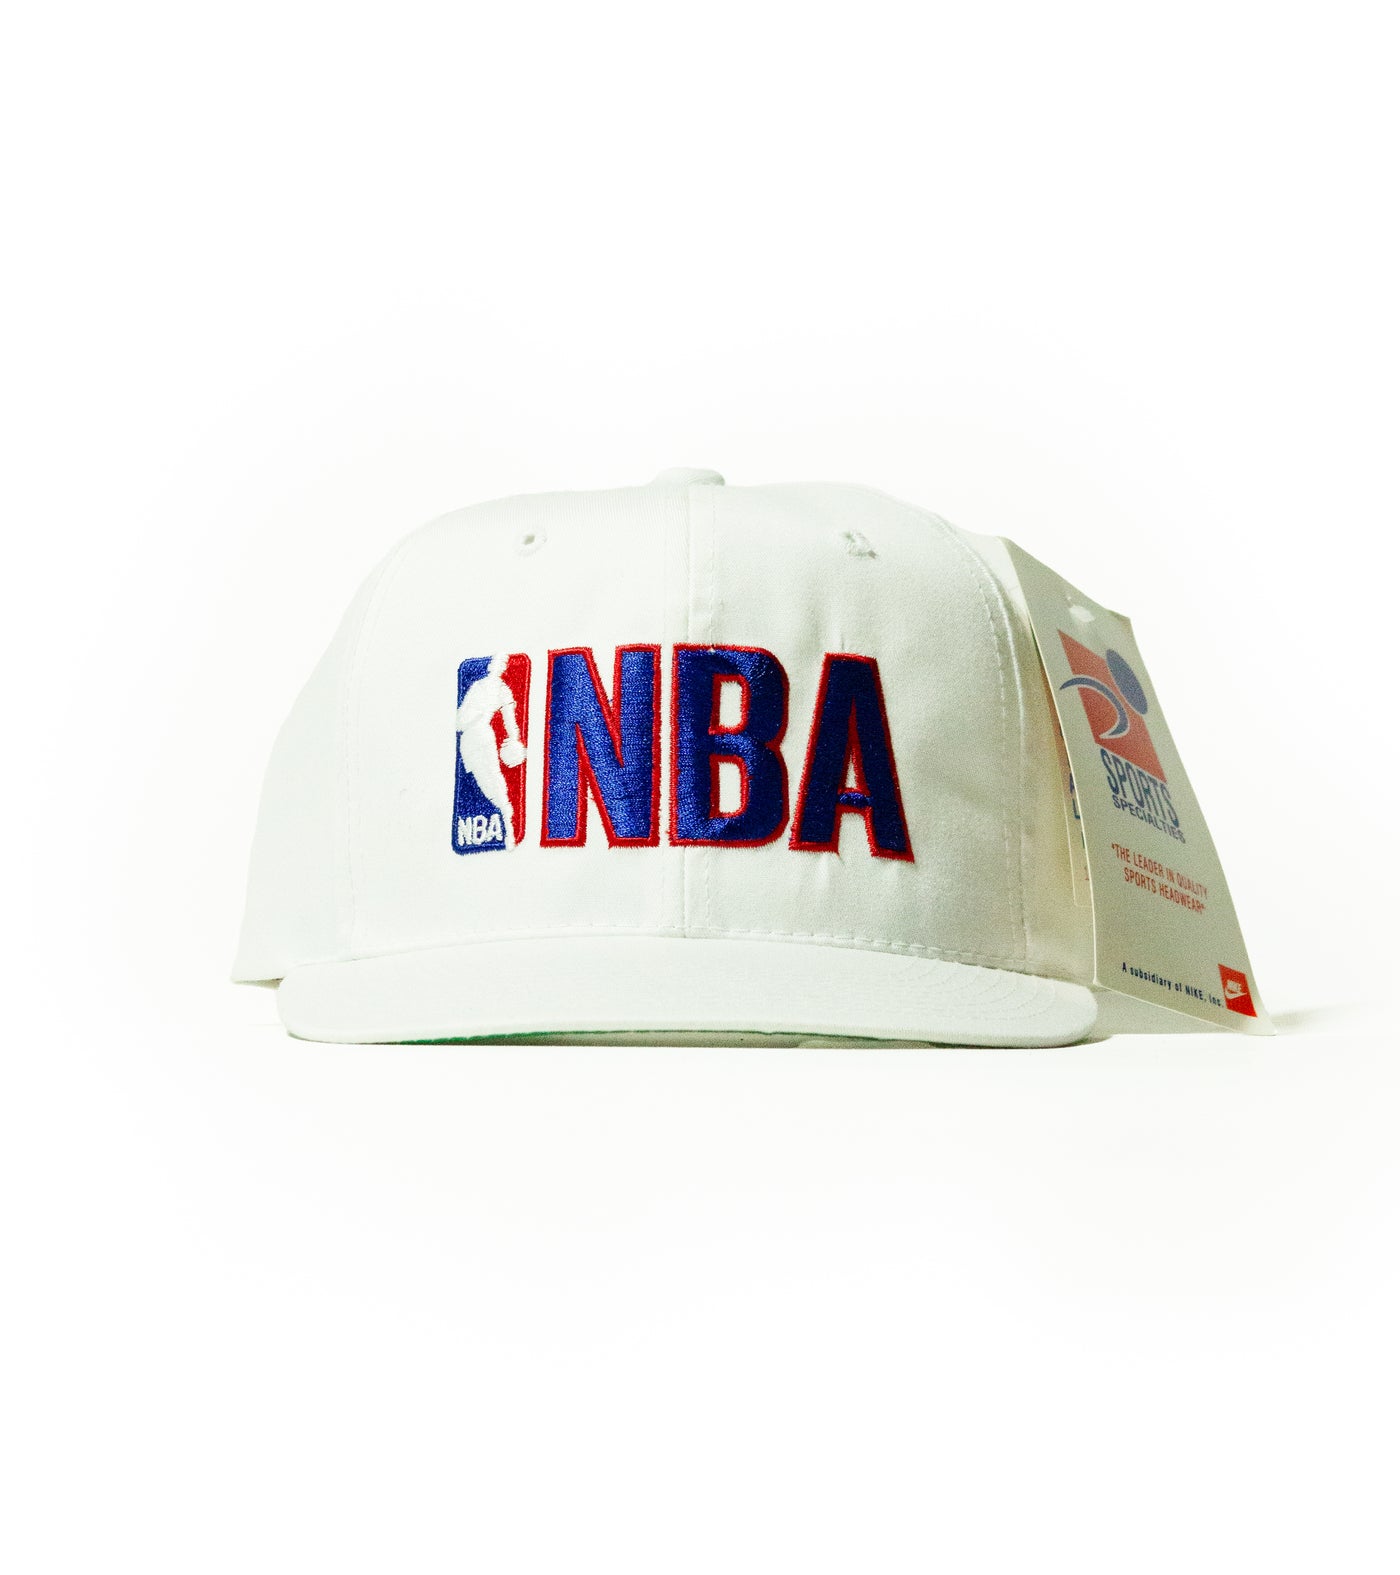 Vintage 90s NBA Logo Sports Specialties Twill Snapback